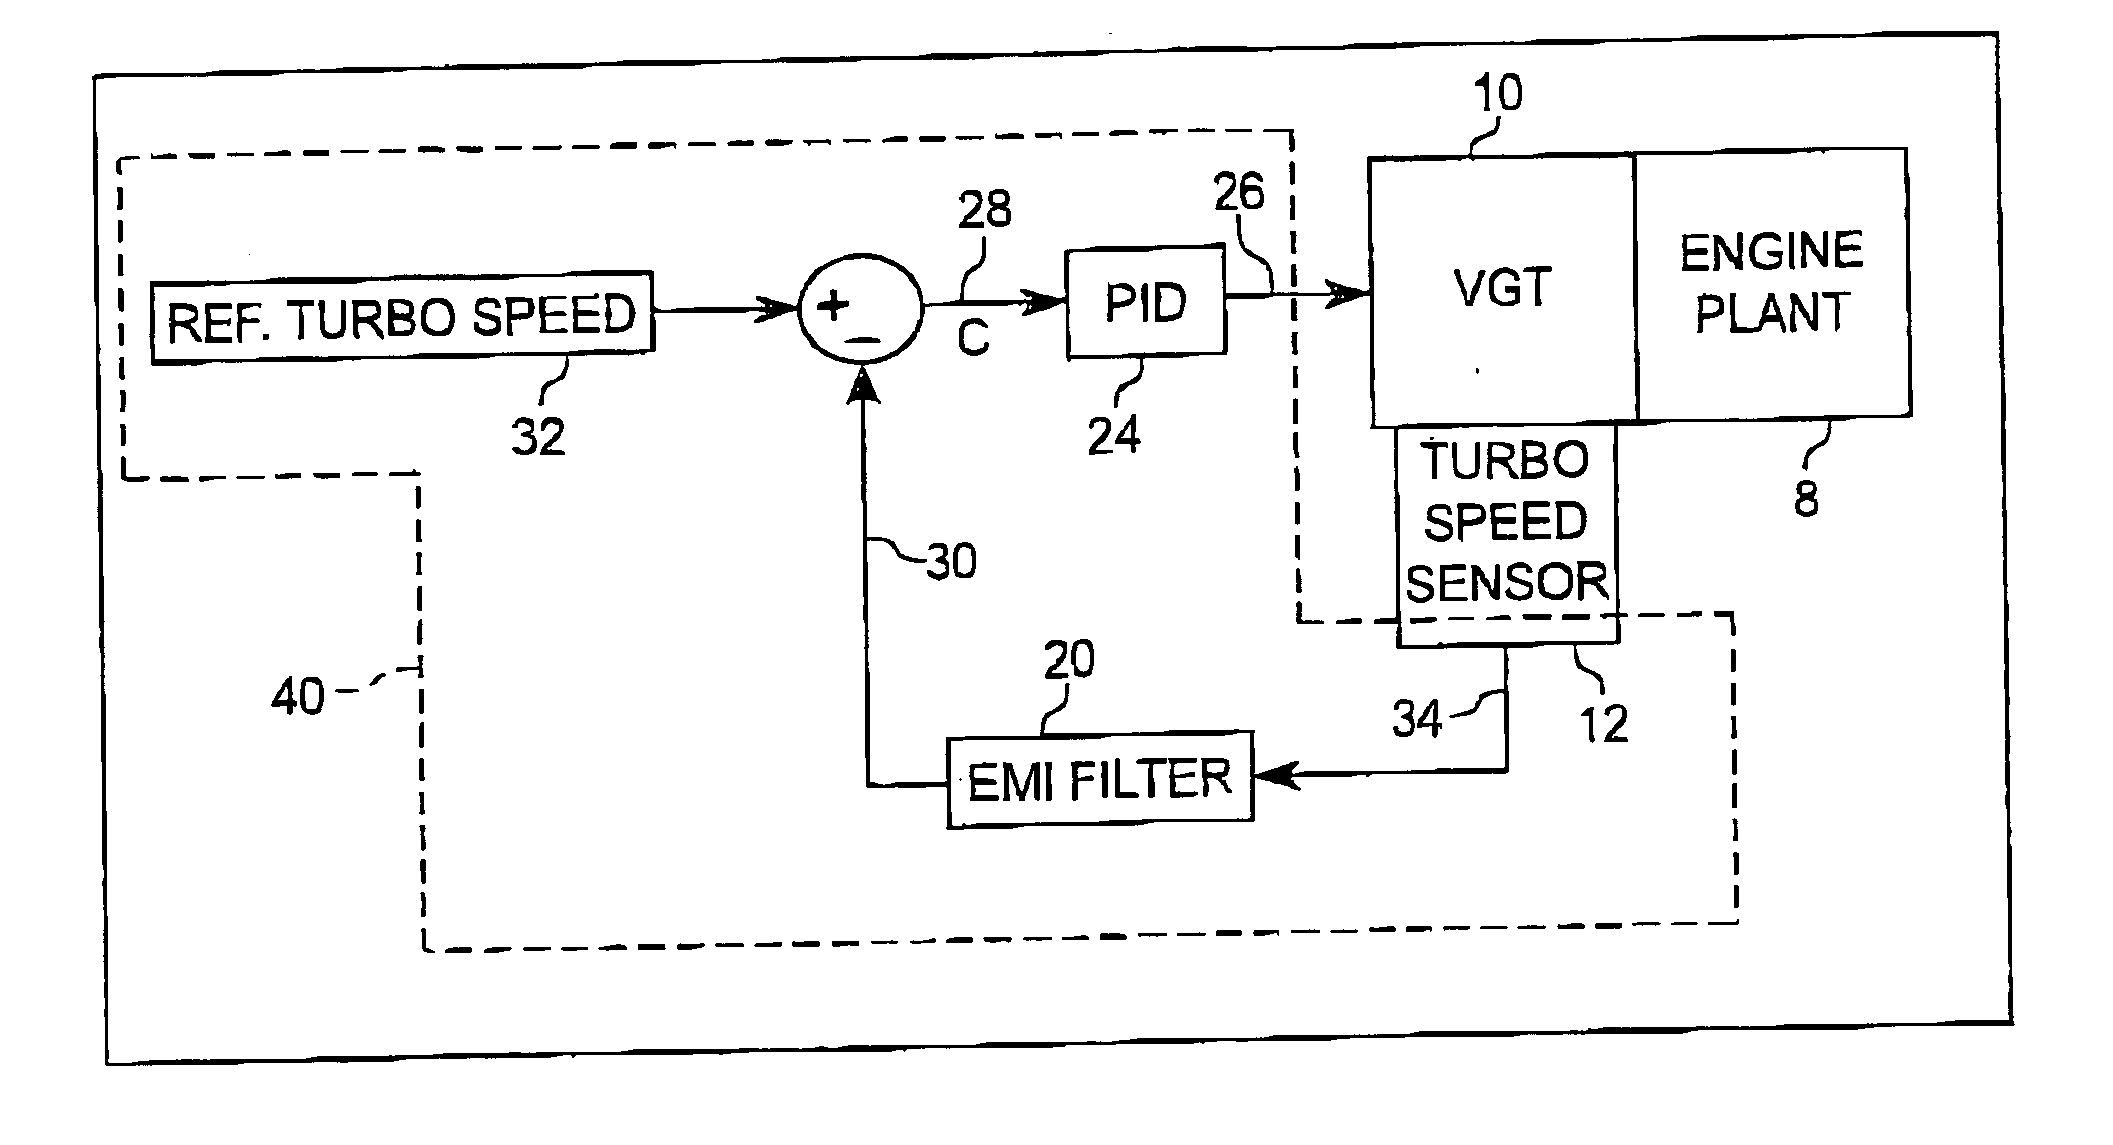 EMI noise filter for eddy current turbo speed sensor